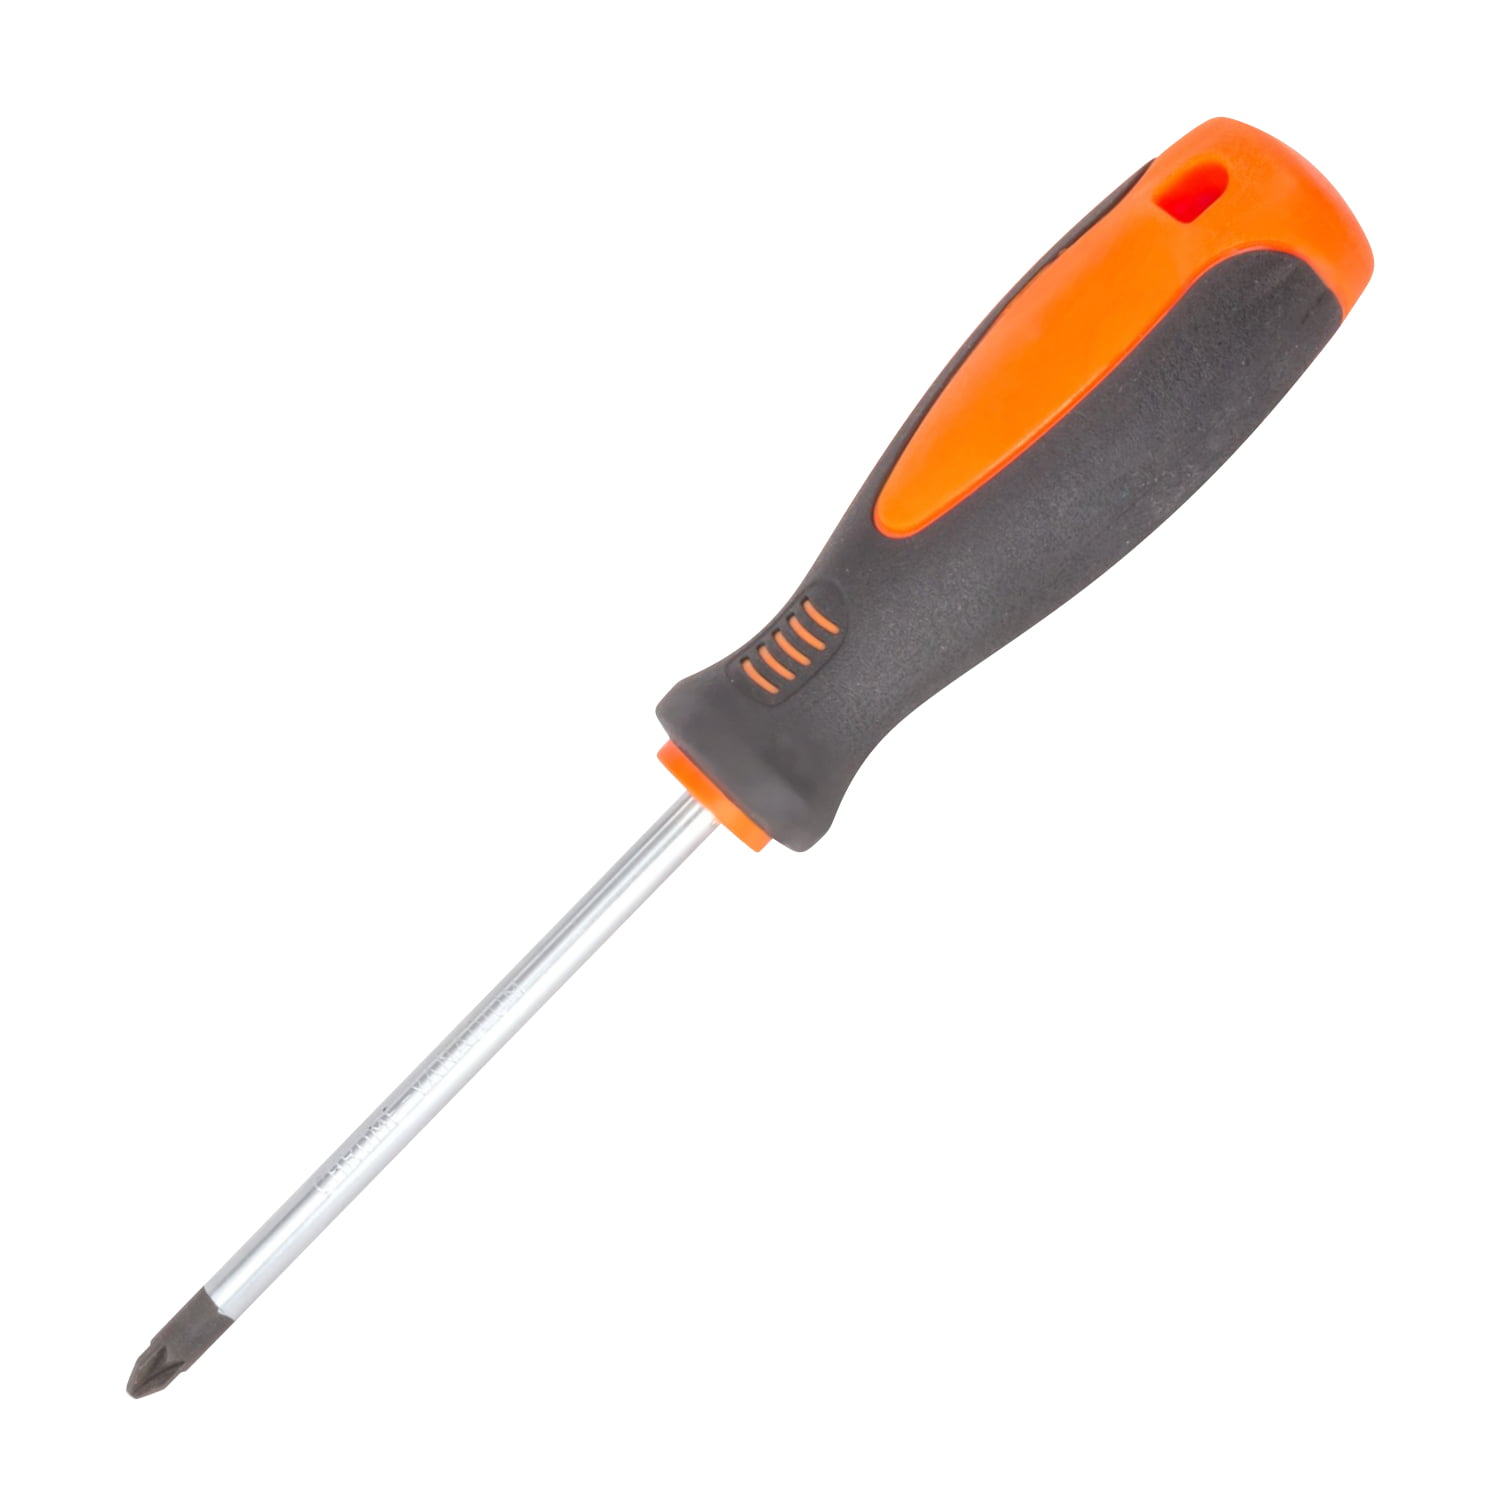 LOKAS Hardened Steel Install Tool Orange & Black 6 in1 Universal Screwdriver Tool Set Flat and Phillips Screwdriver Bit 